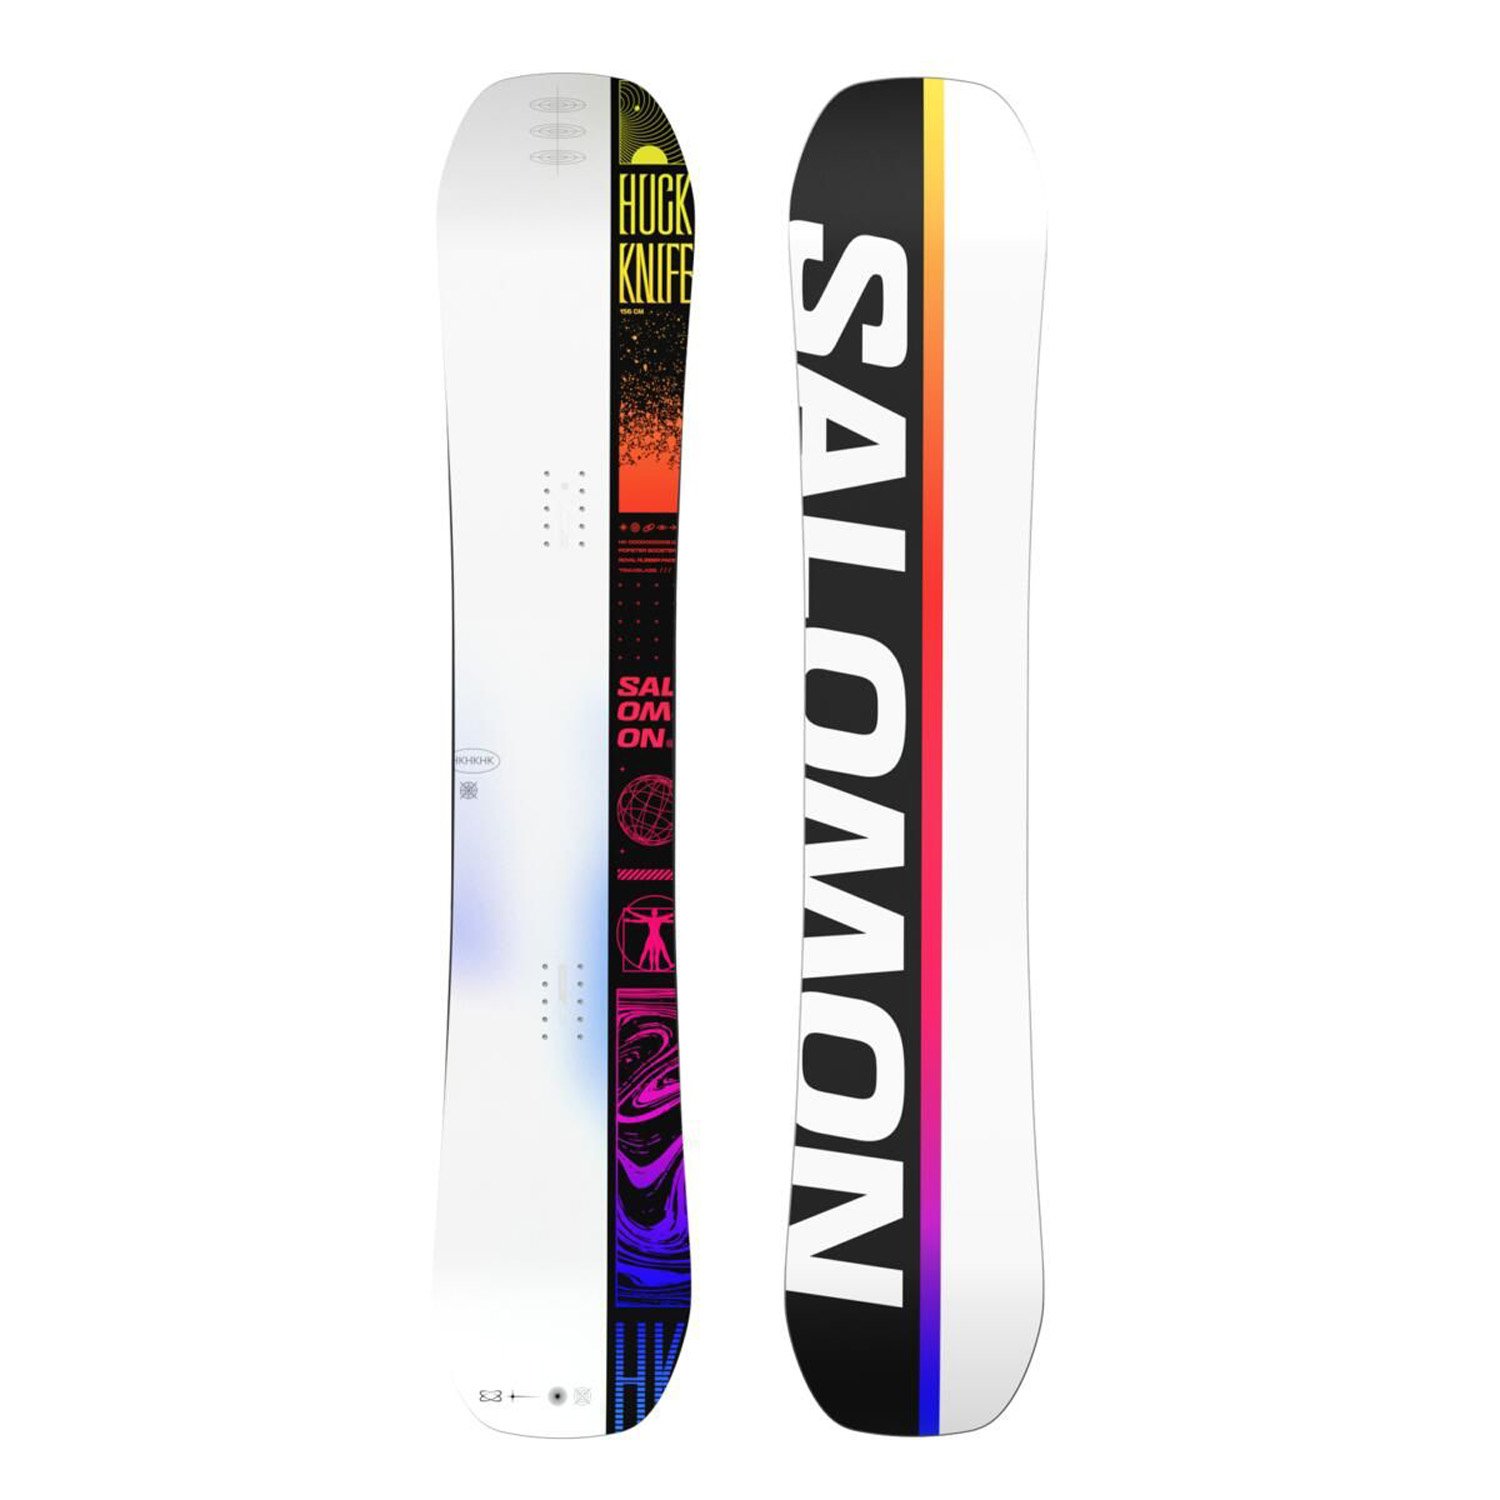 Salomon Huck Knife Snowboard - Renkli - 1